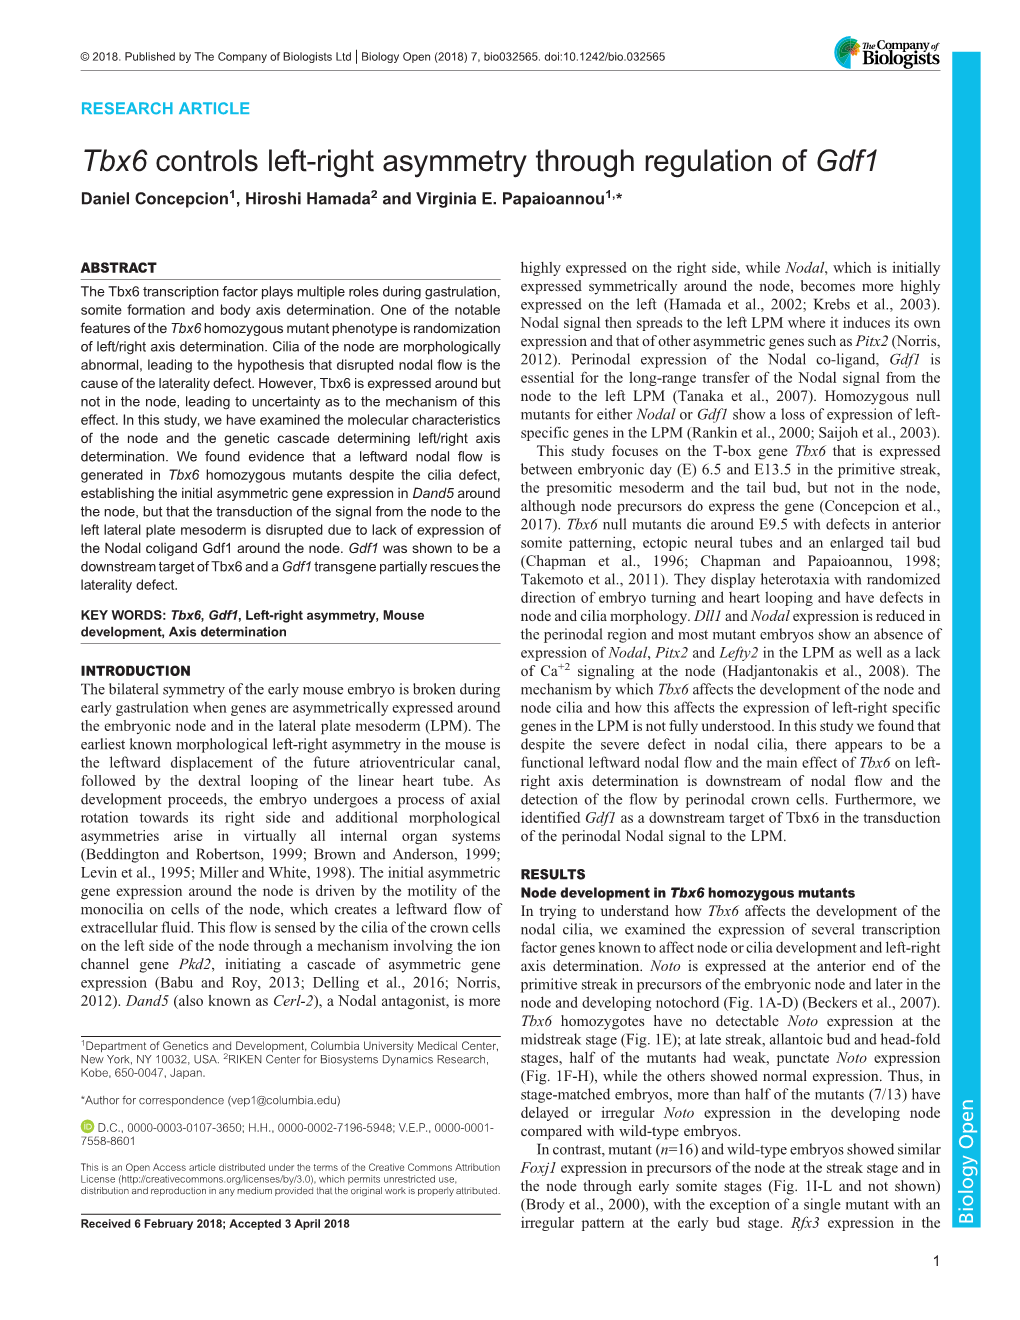 Tbx6 Controls Left-Right Asymmetry Through Regulation of Gdf1 Daniel Concepcion1, Hiroshi Hamada2 and Virginia E